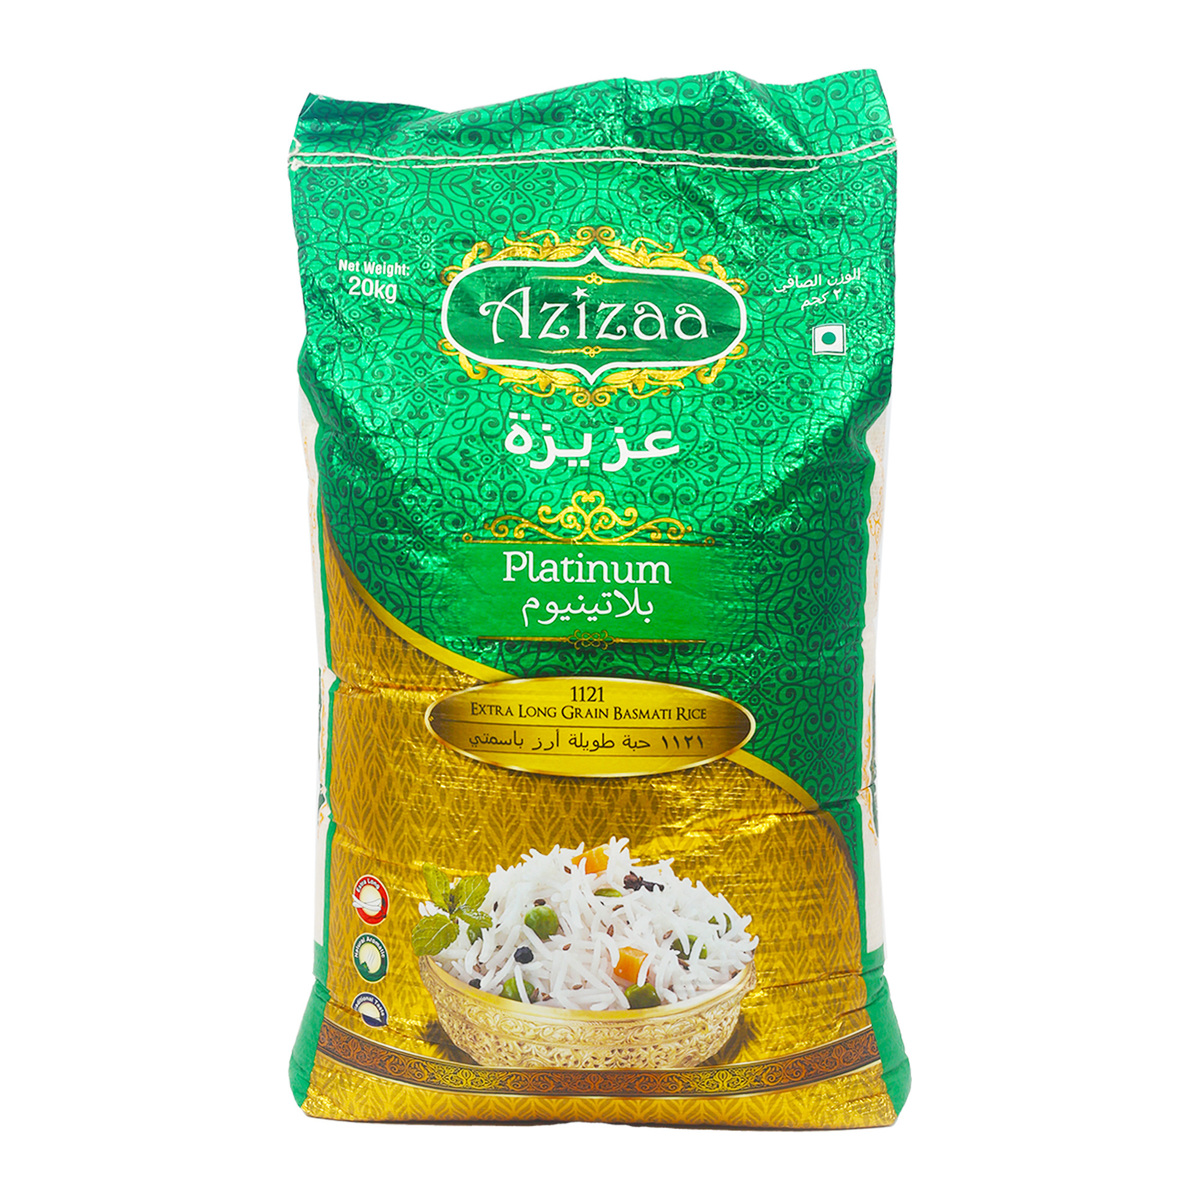 Azizaa Platinum Basmati Rice 20 kg